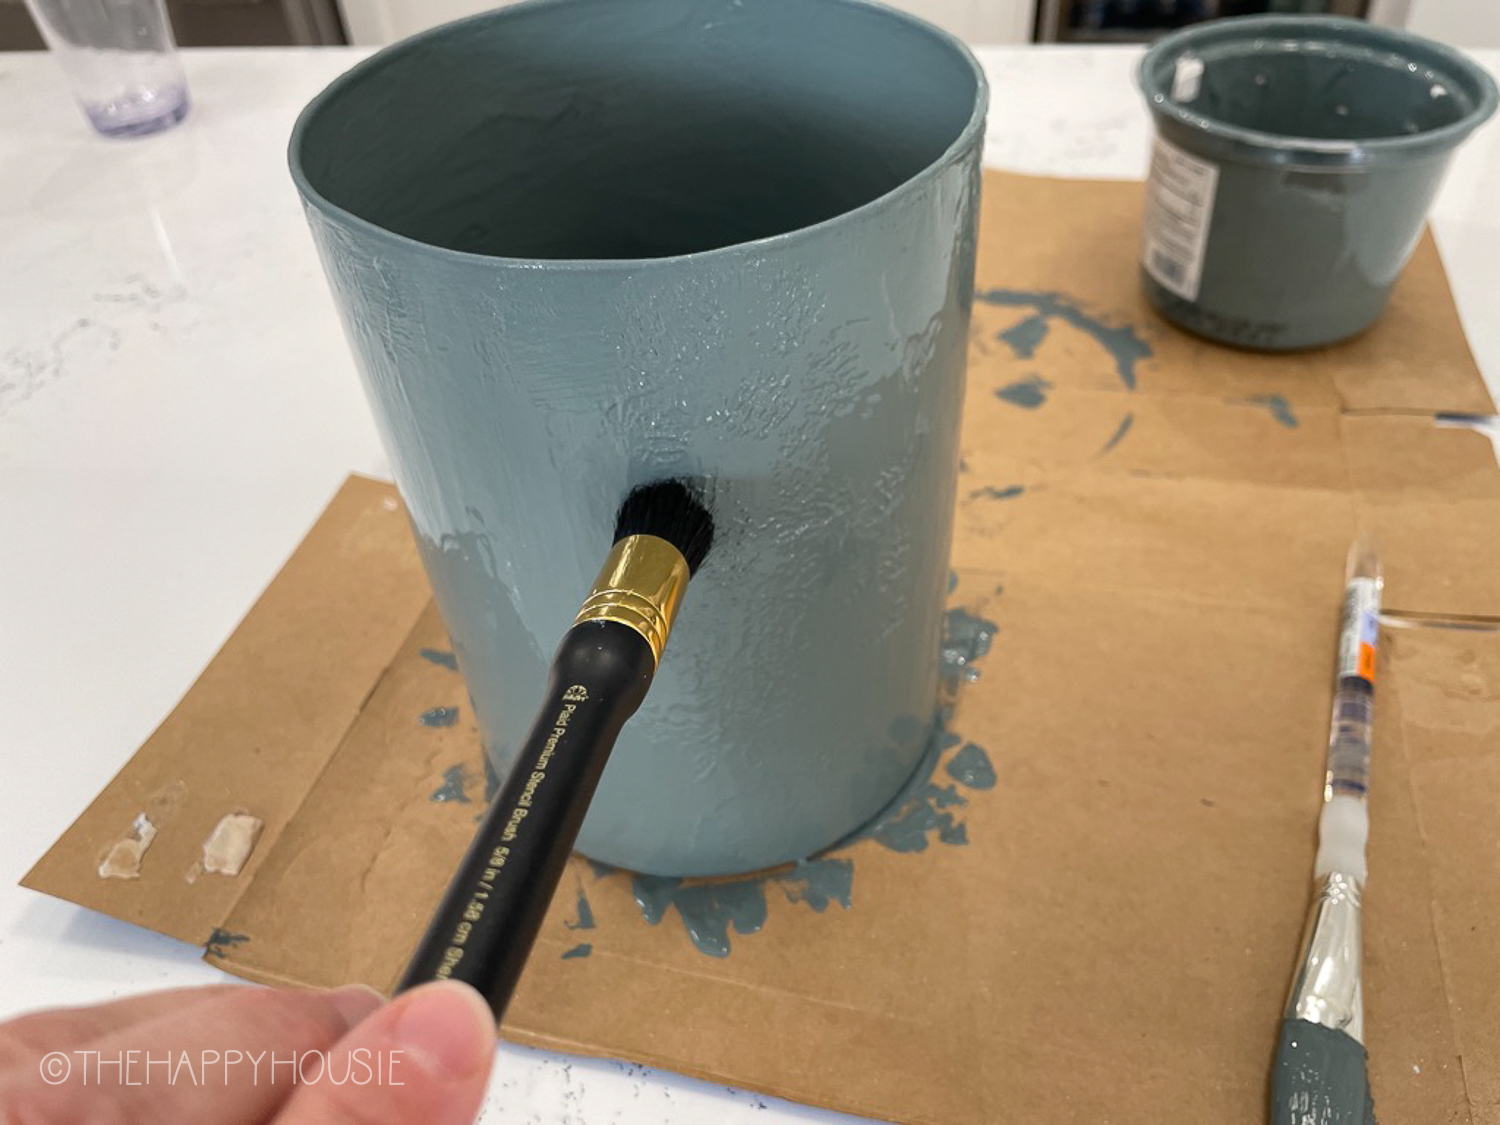 Using a stipple brush on the vase.